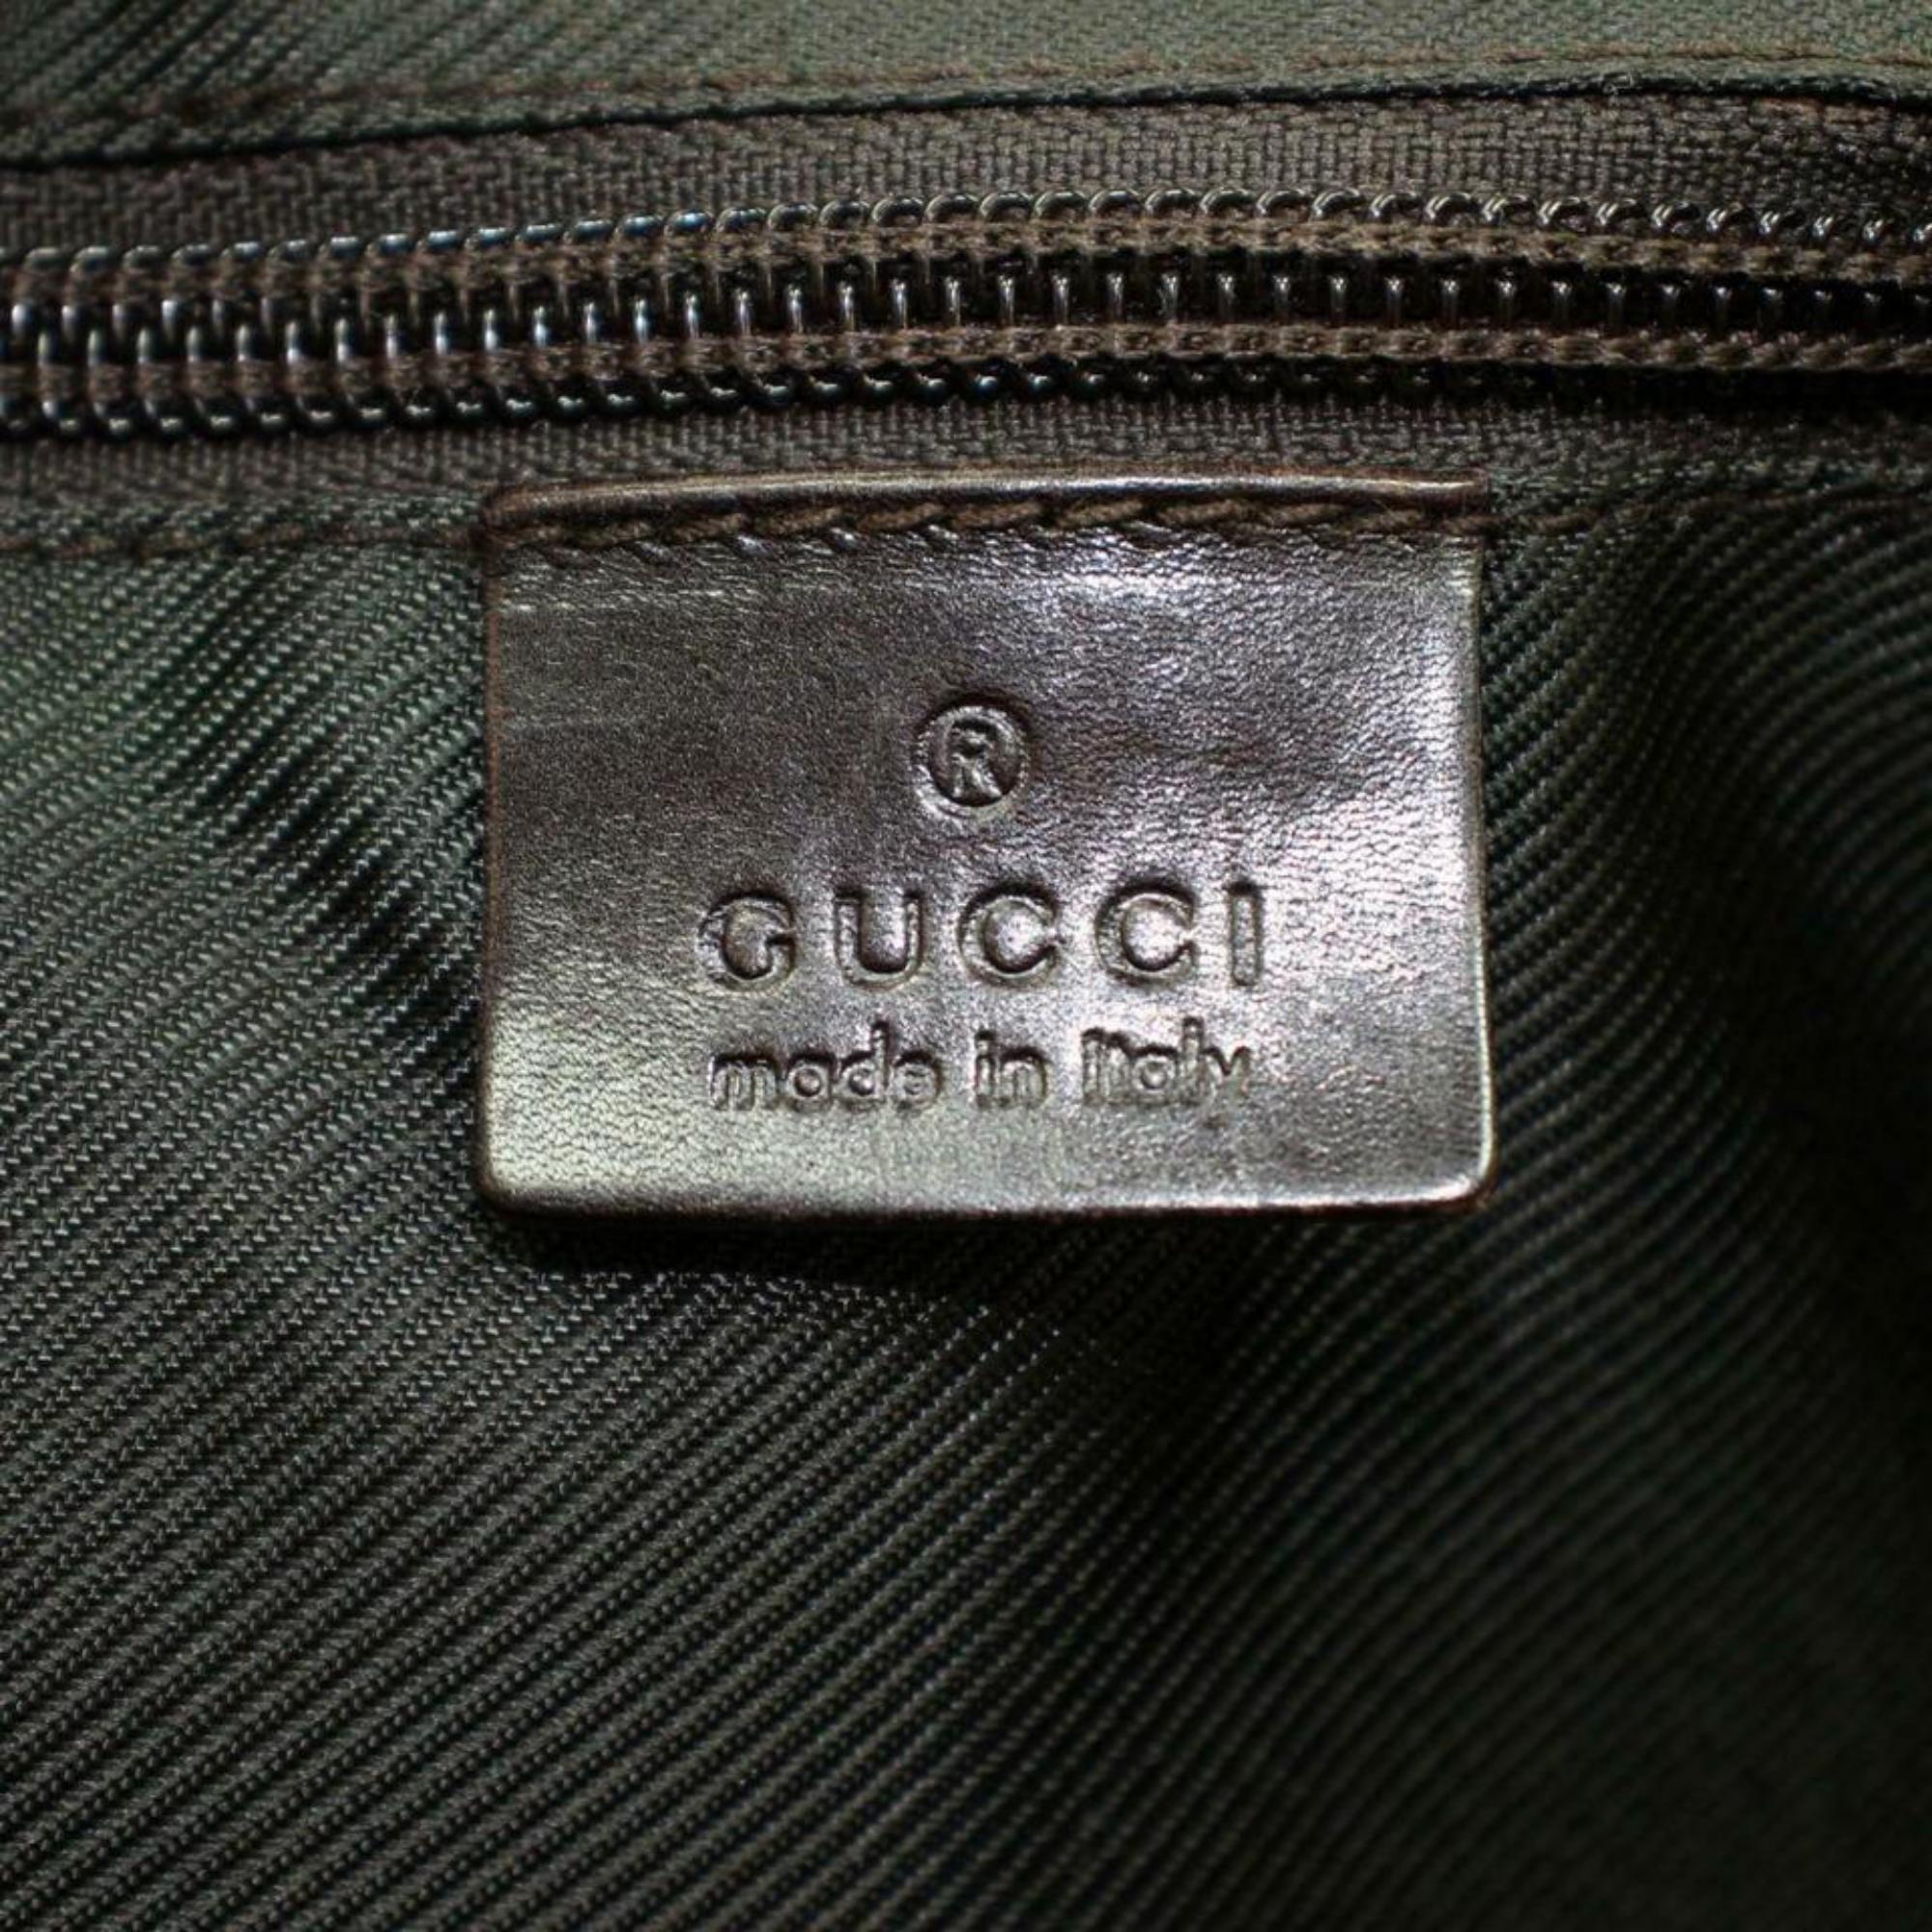 gucci inside tag